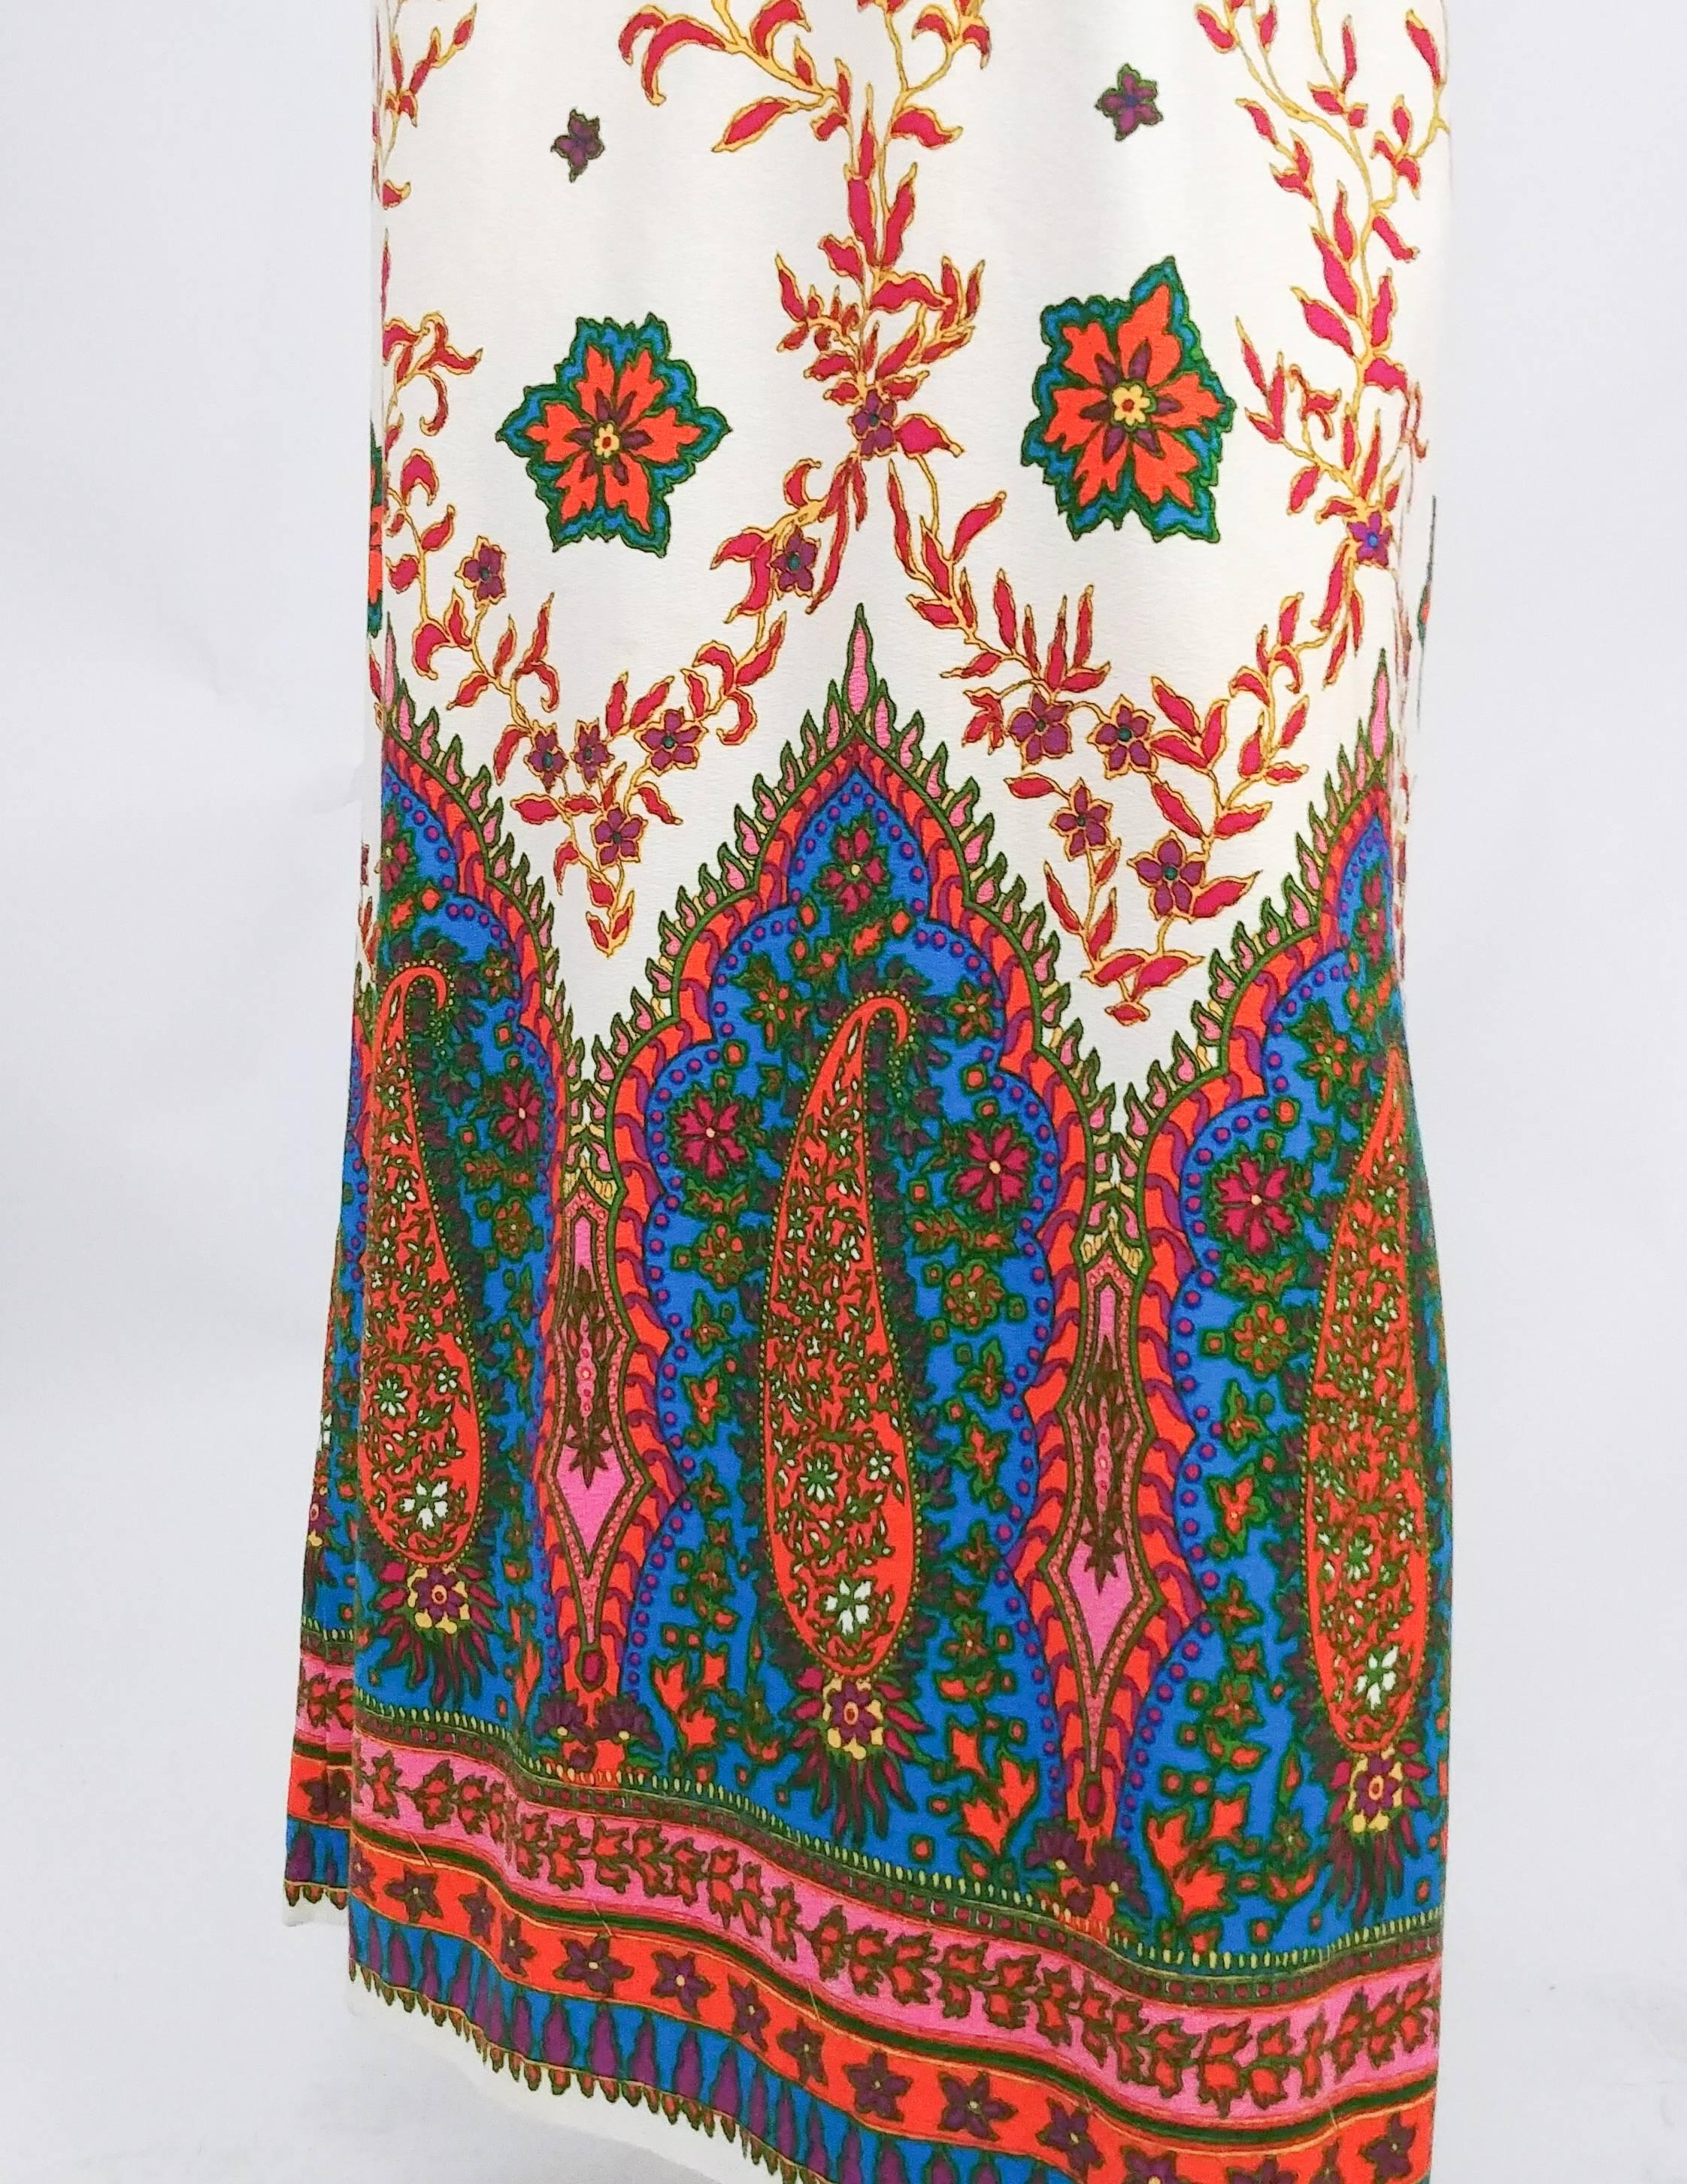 1960s Indian Print Maxi Dress. Colorful border print, raglan cut sleeveless dress, zips up back.